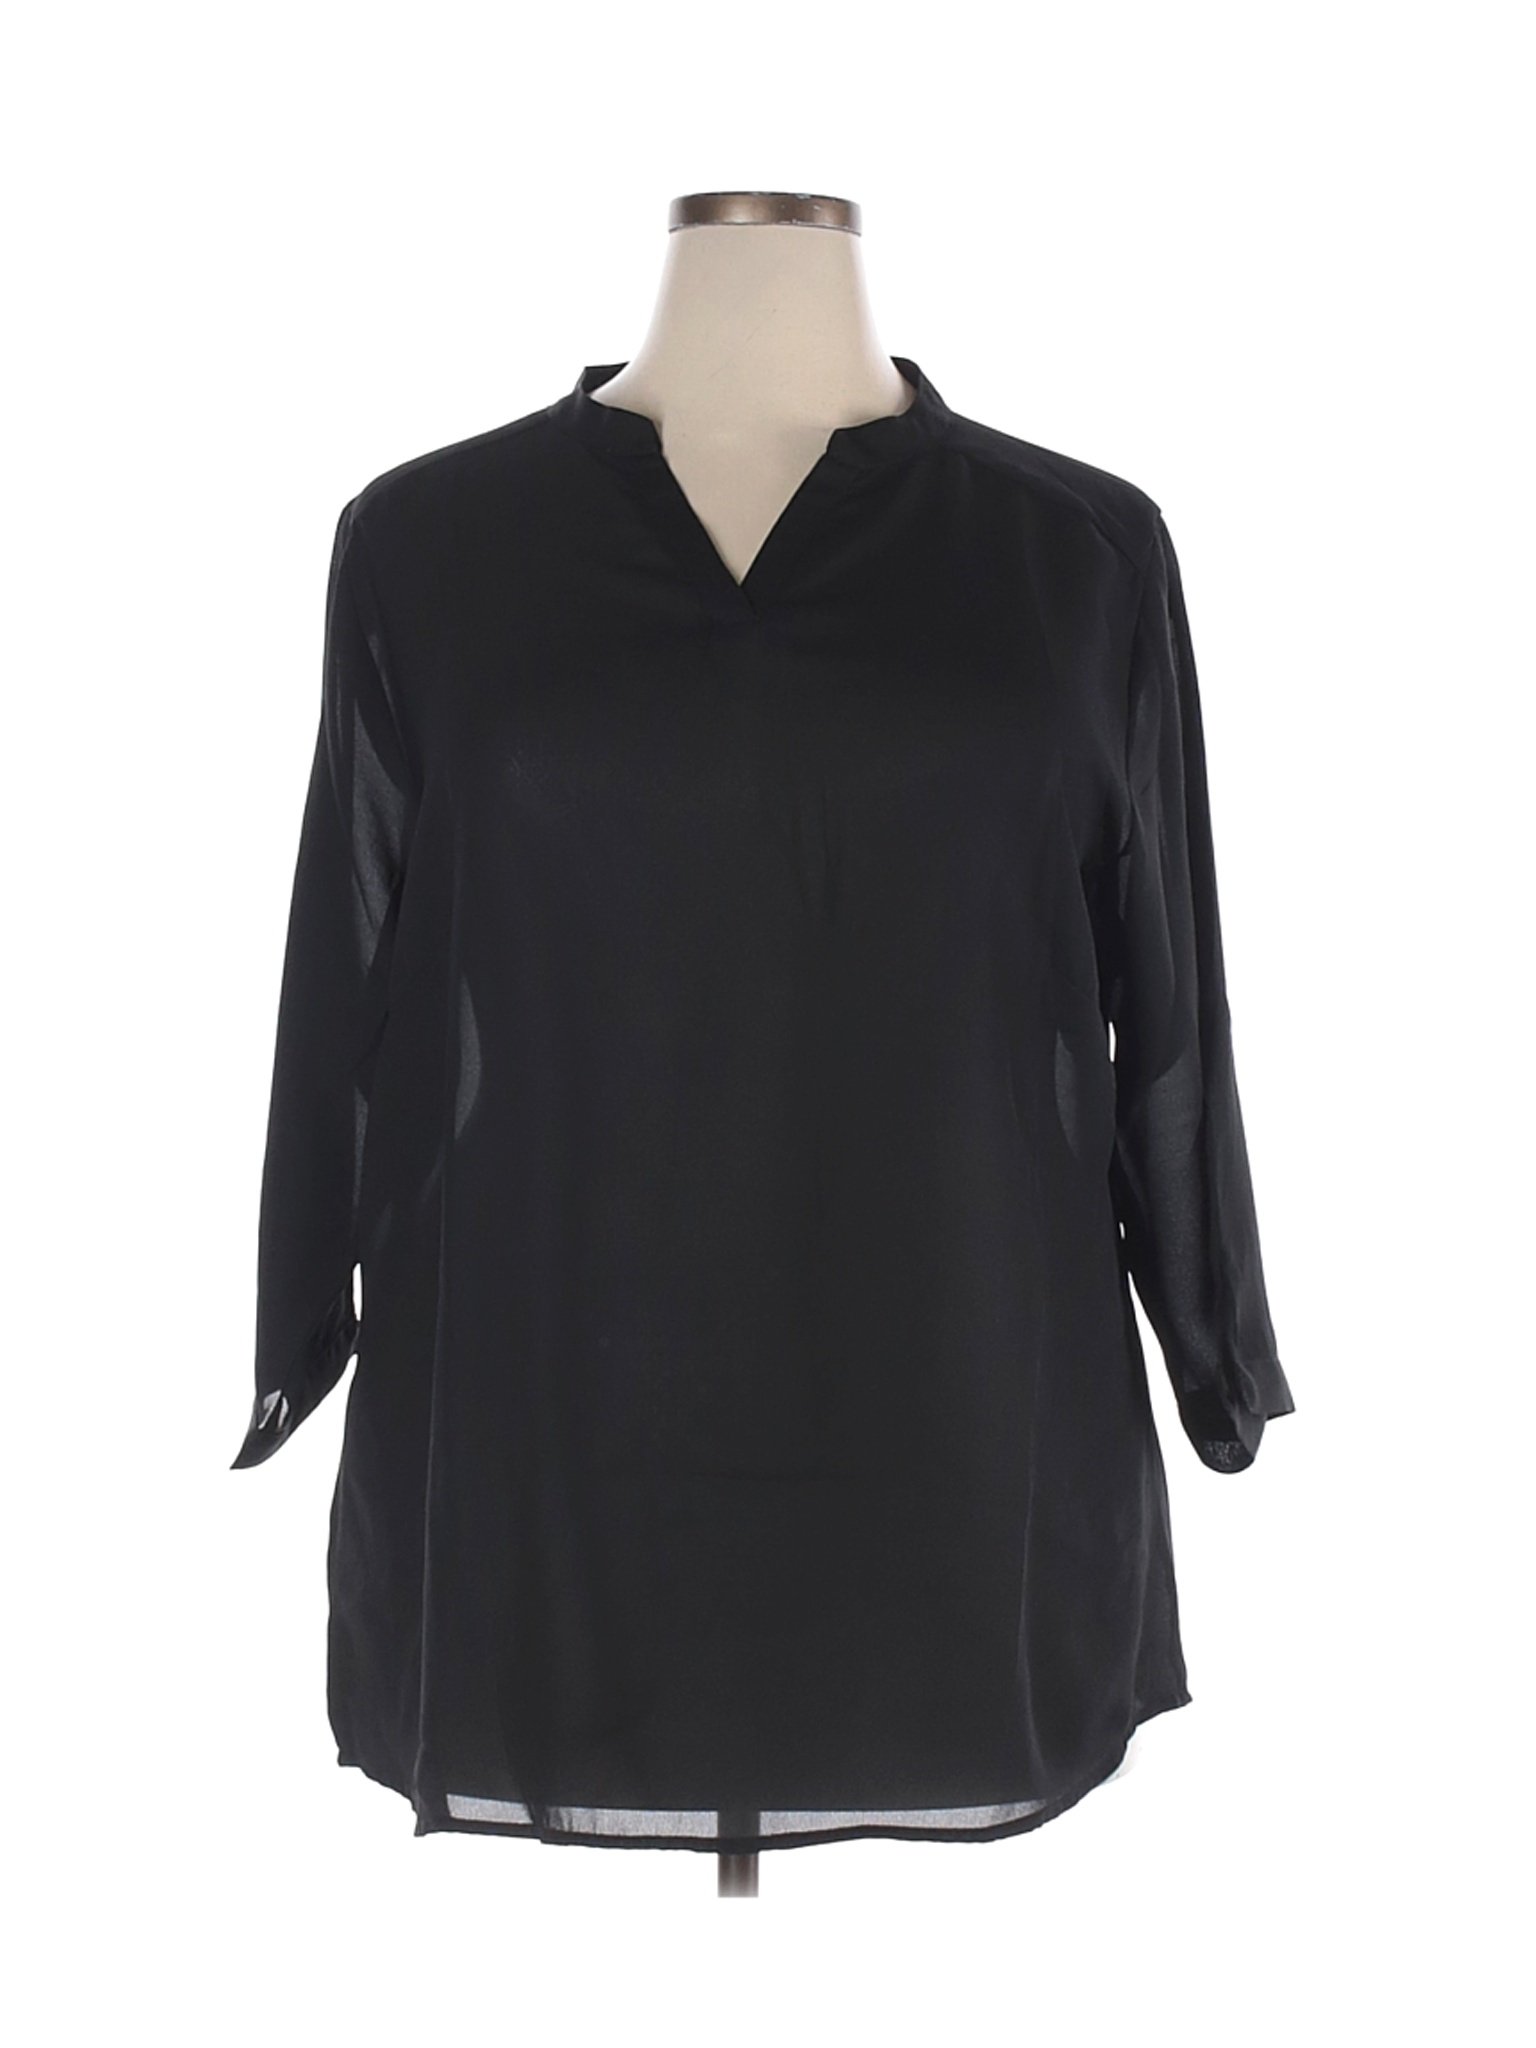 Cotton Traders Women Black 3/4 Sleeve Blouse 22 Plus | eBay